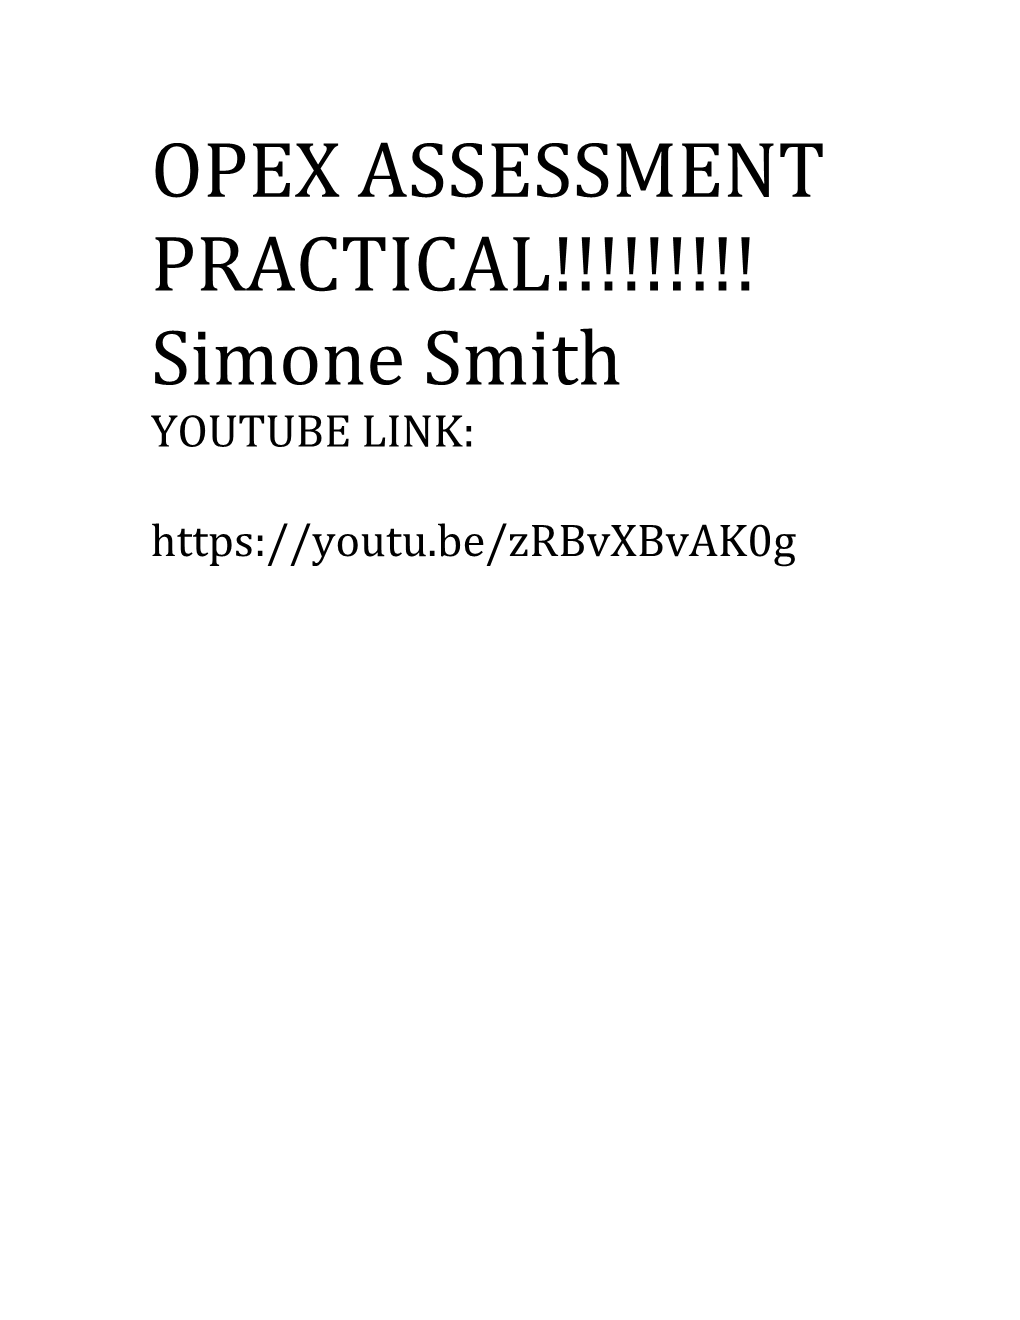 Opex Assessment